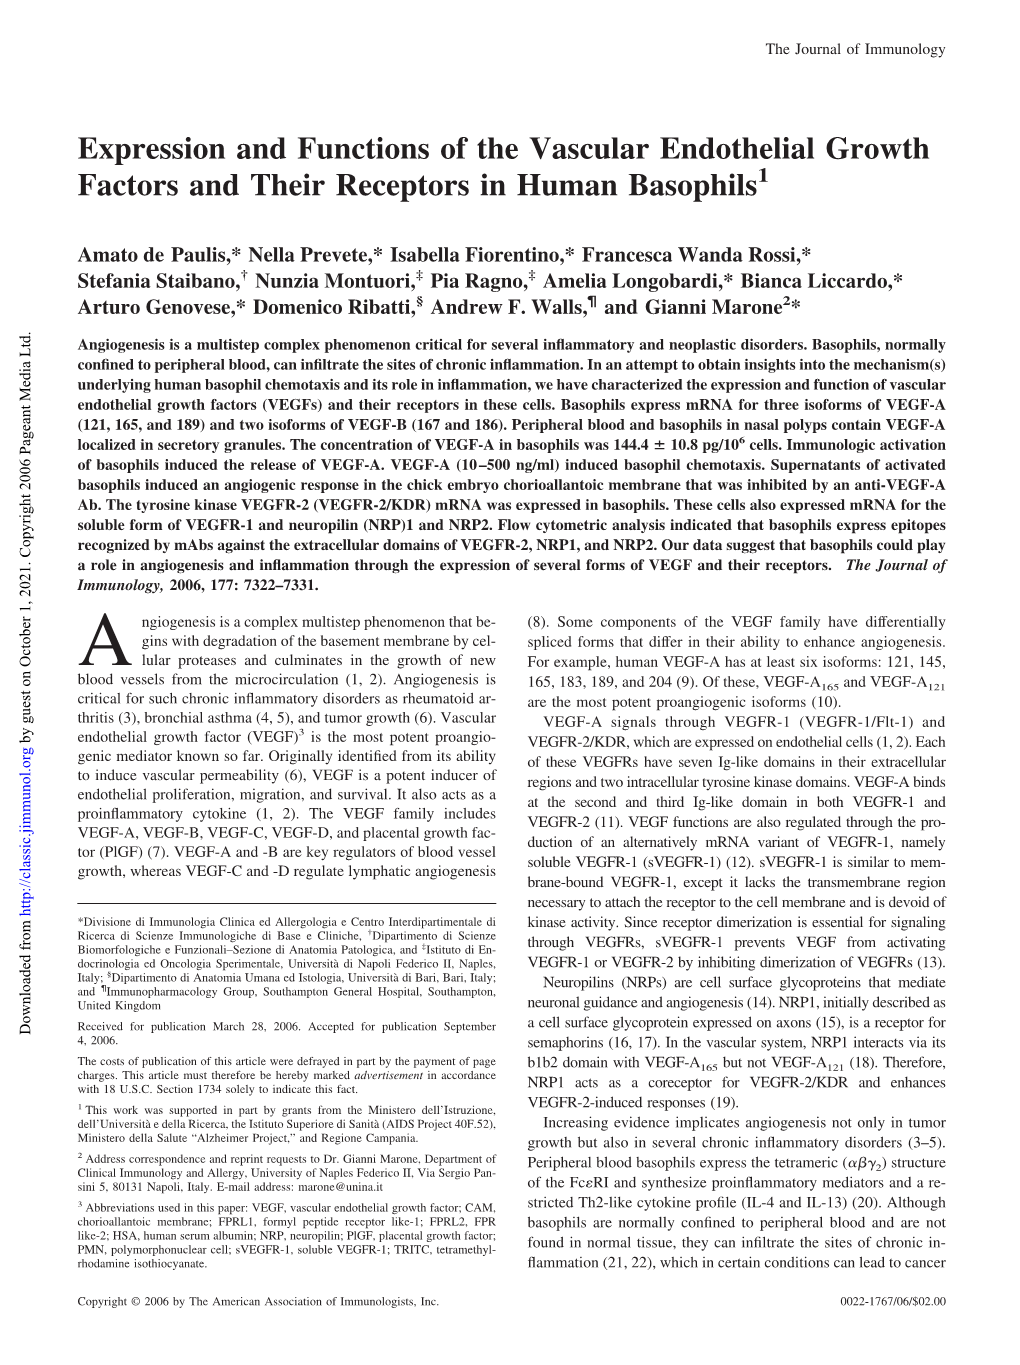 Receptors in Human Basophils Endothelial Growth Factors And